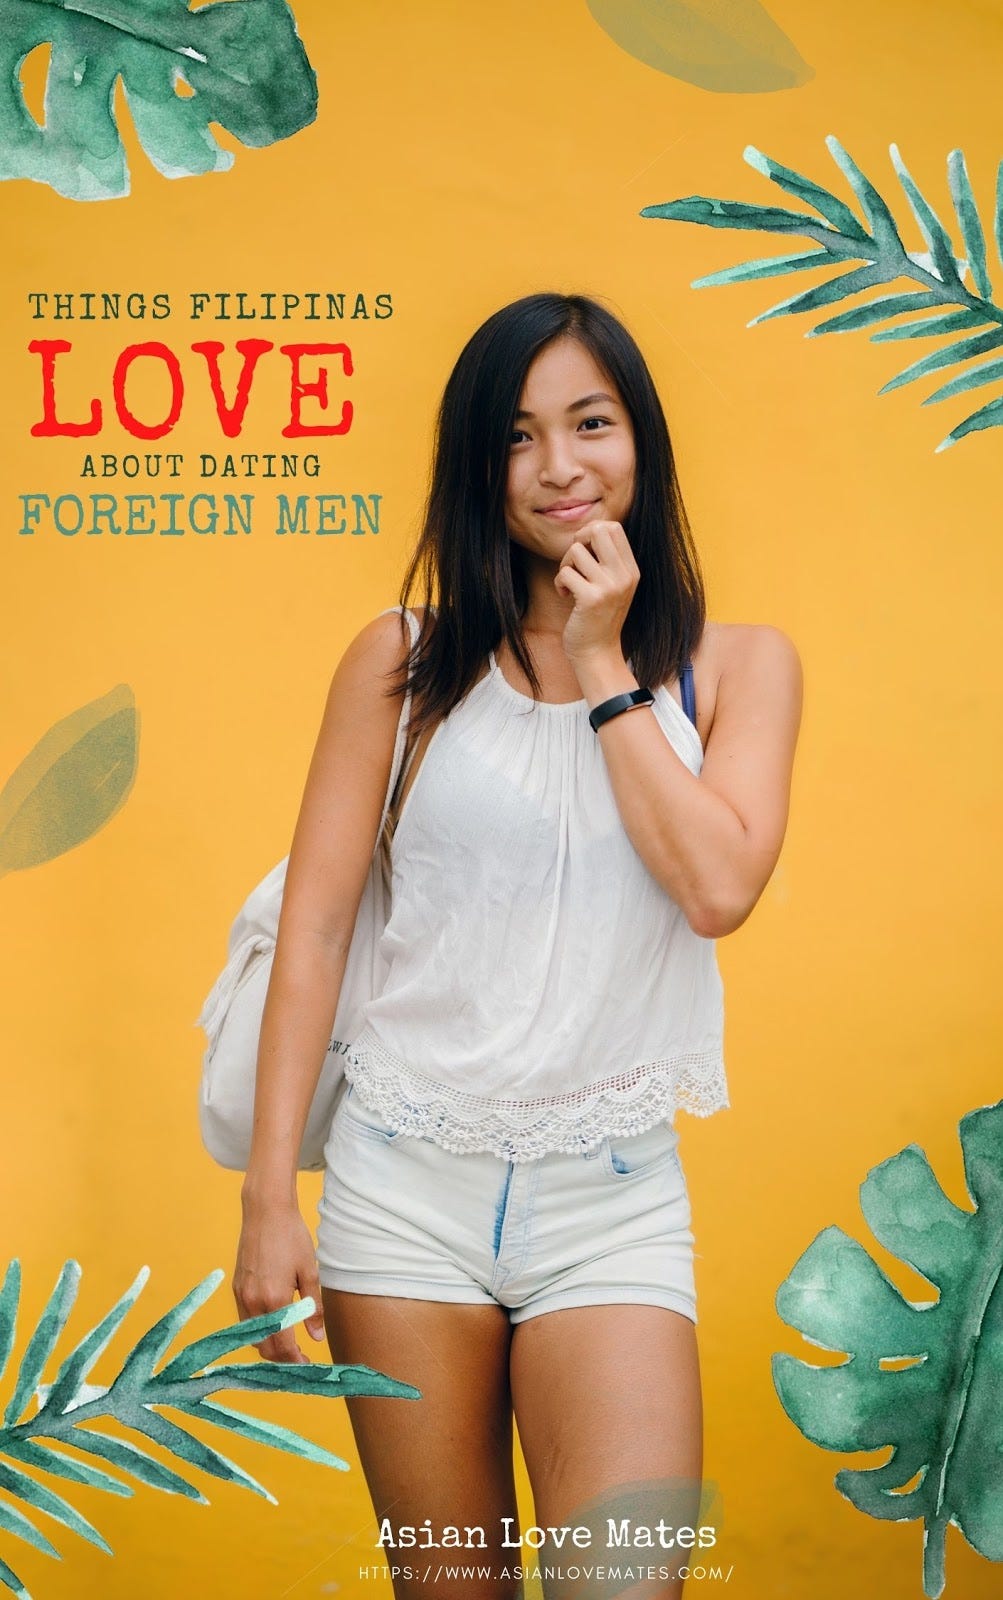 Why Filipino Women LOVE Dating Foreign Men by Yasmin Del Rosario Medium